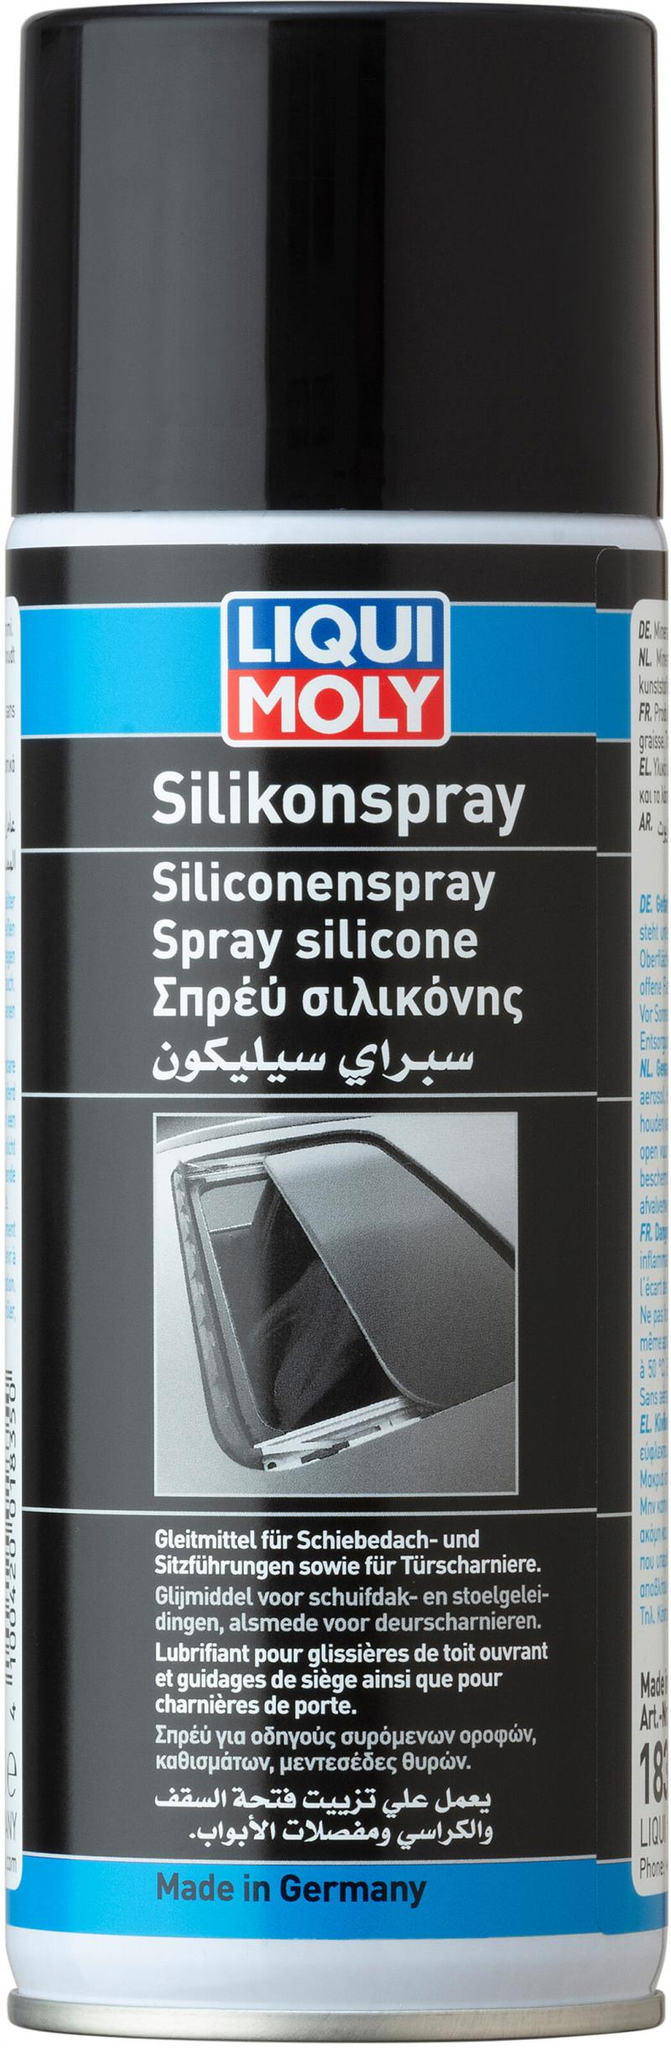 https://cdn.webshopapp.com/shops/71199/files/441801689/liqui-moly-silicone-spray-400ml.jpg